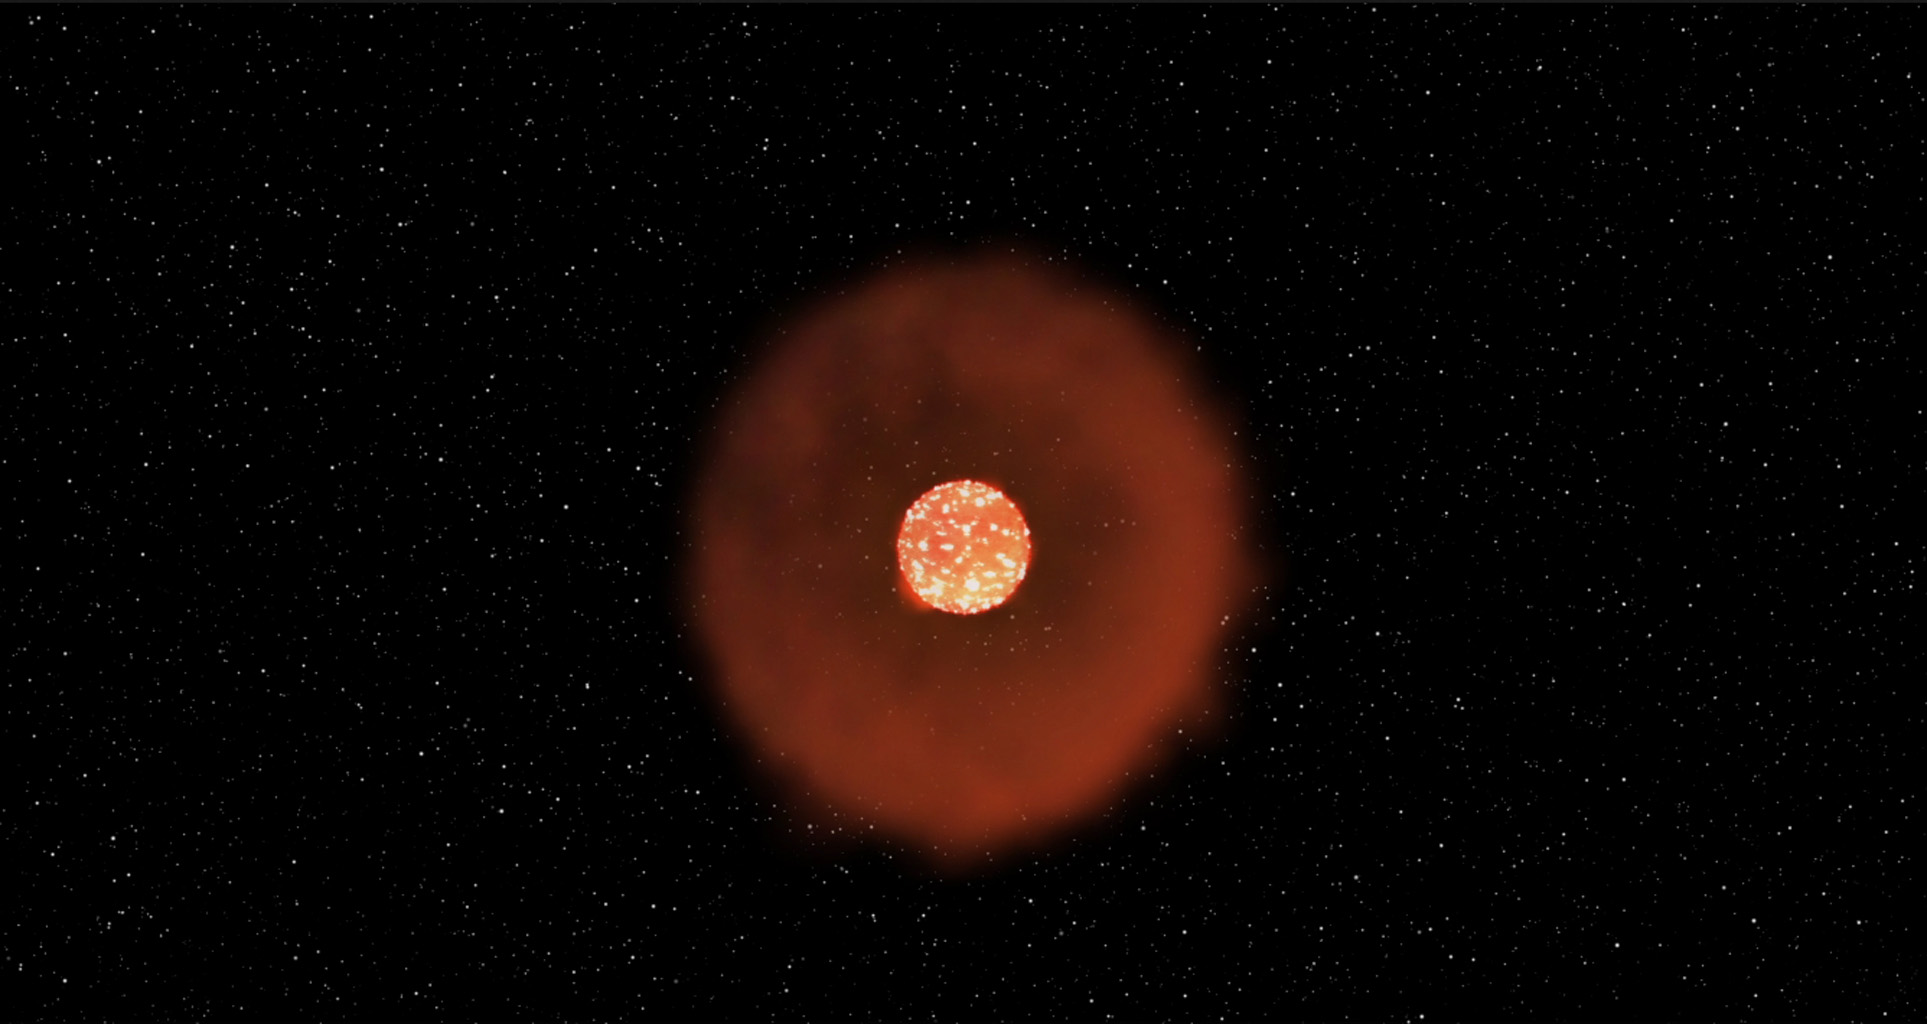 Supernova tipo FELT (Fast-Evolving Luminous Transient) captada por el telescopio Kepler en 2012 (NASA)